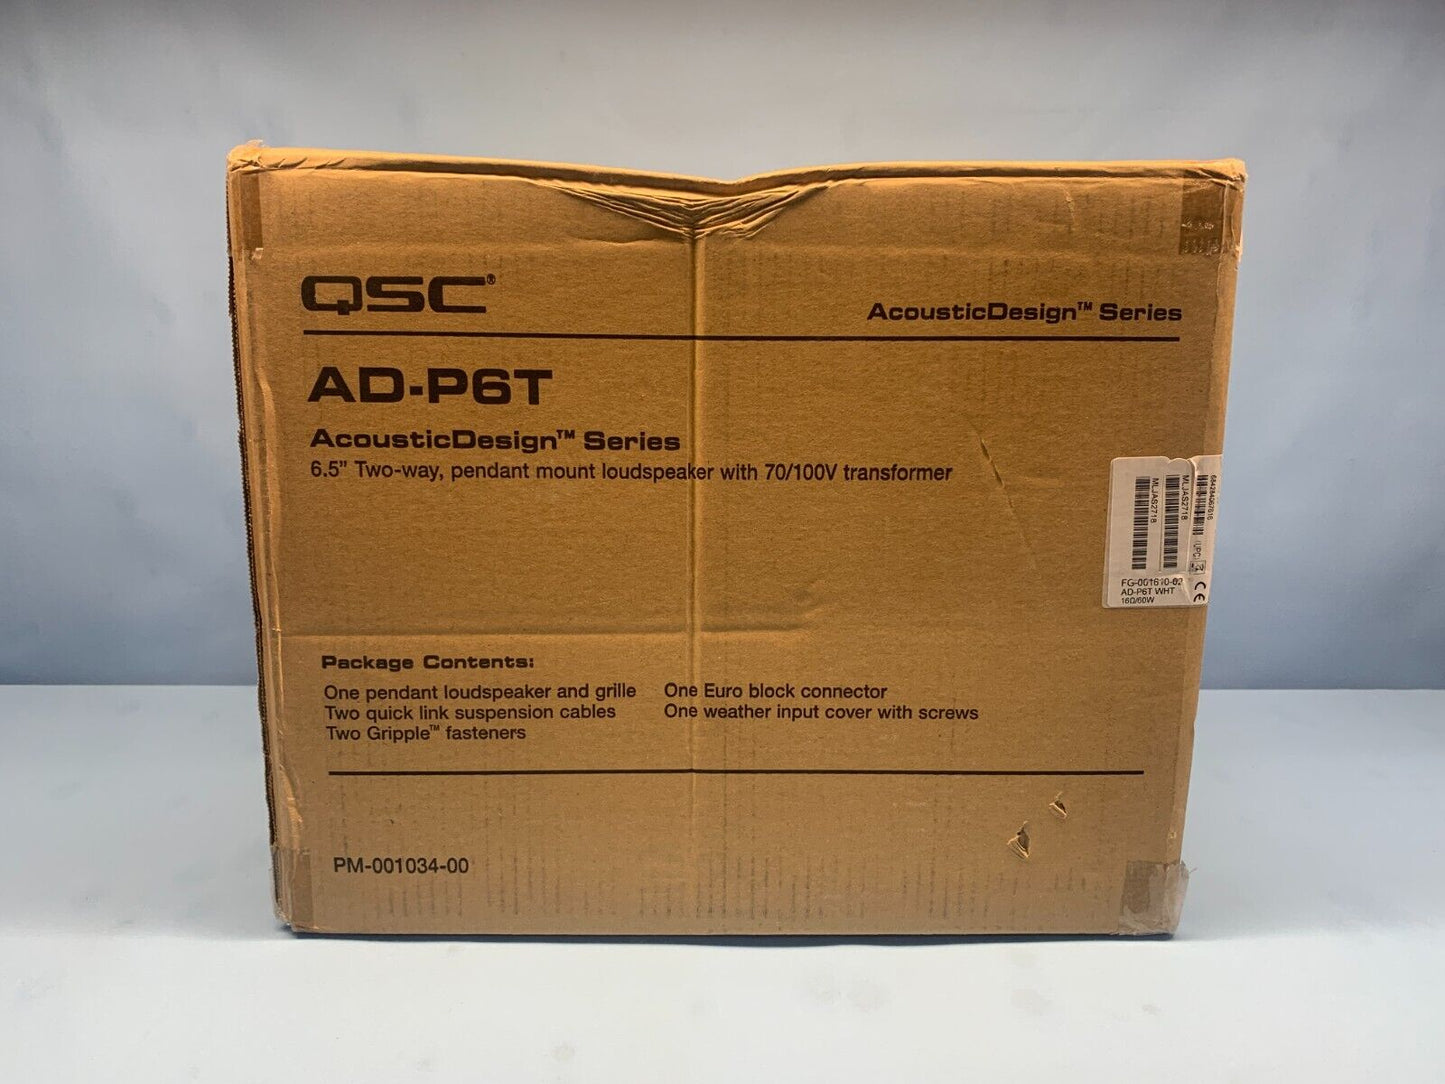 QSC AD-P6T AcousticDesign 60W Pendant Loudspeaker, White (FG-001610-02)